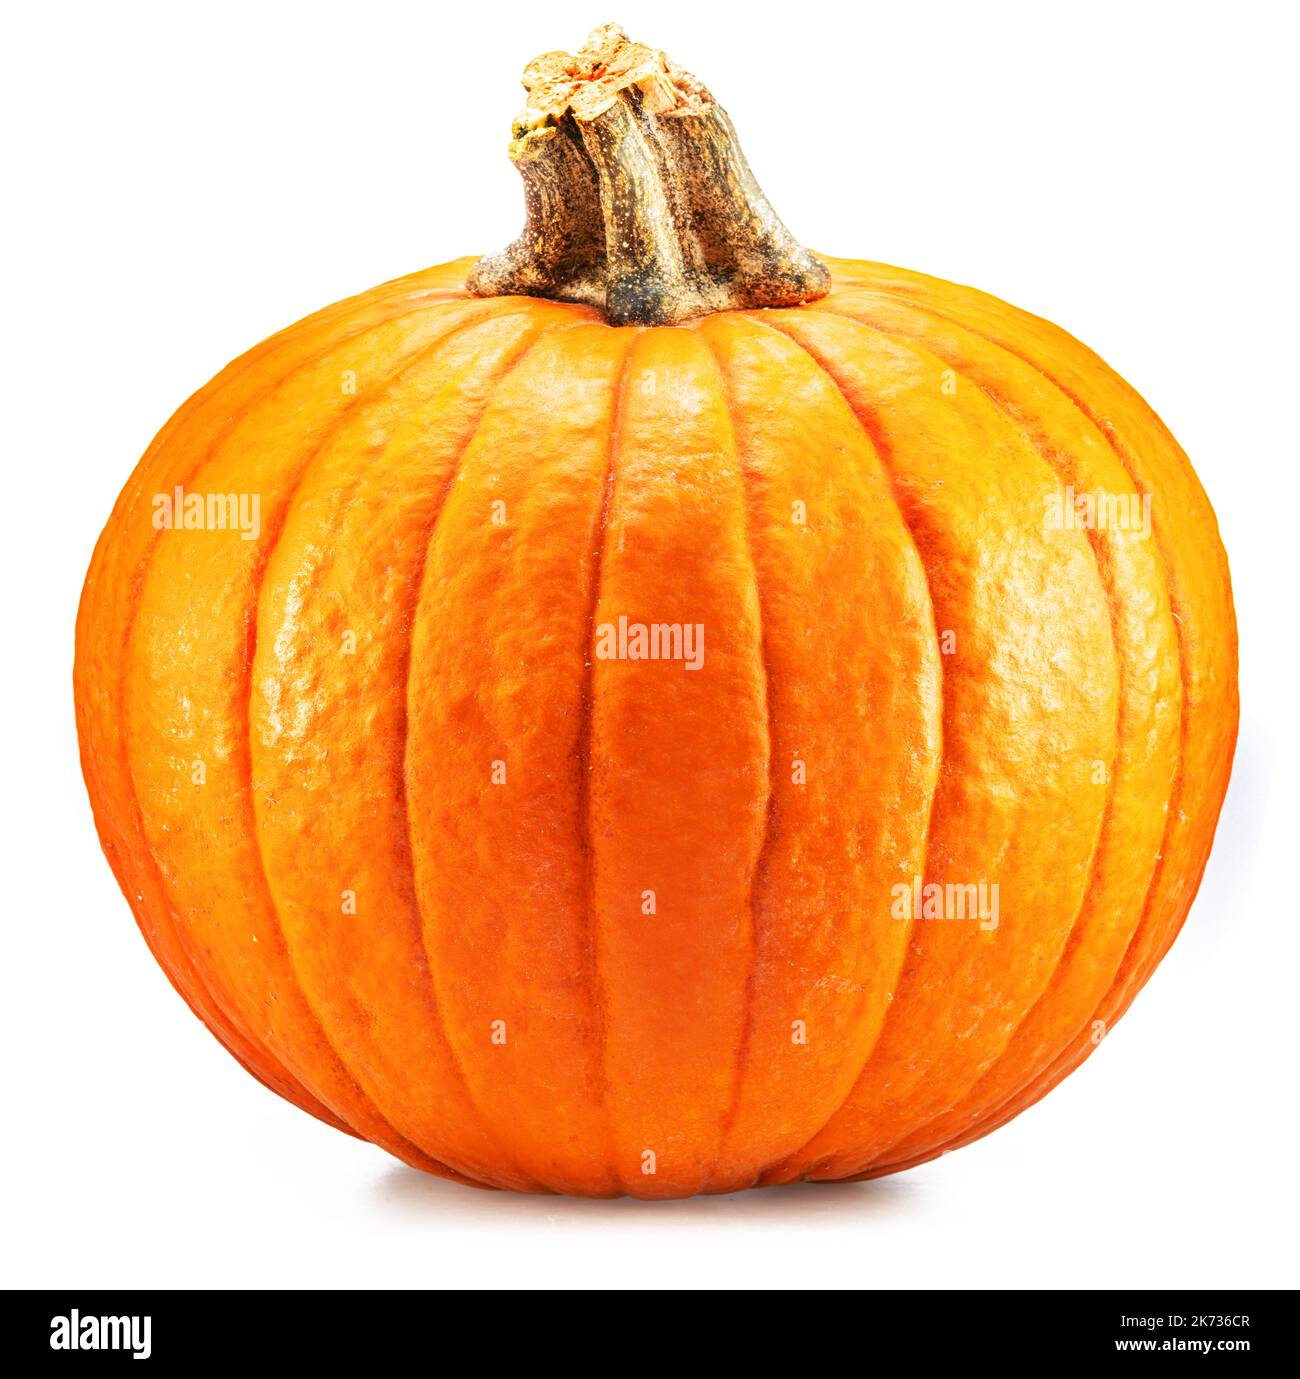 Orange round pumpkin, symbol of Halloween isolated on white background. Stock Photo